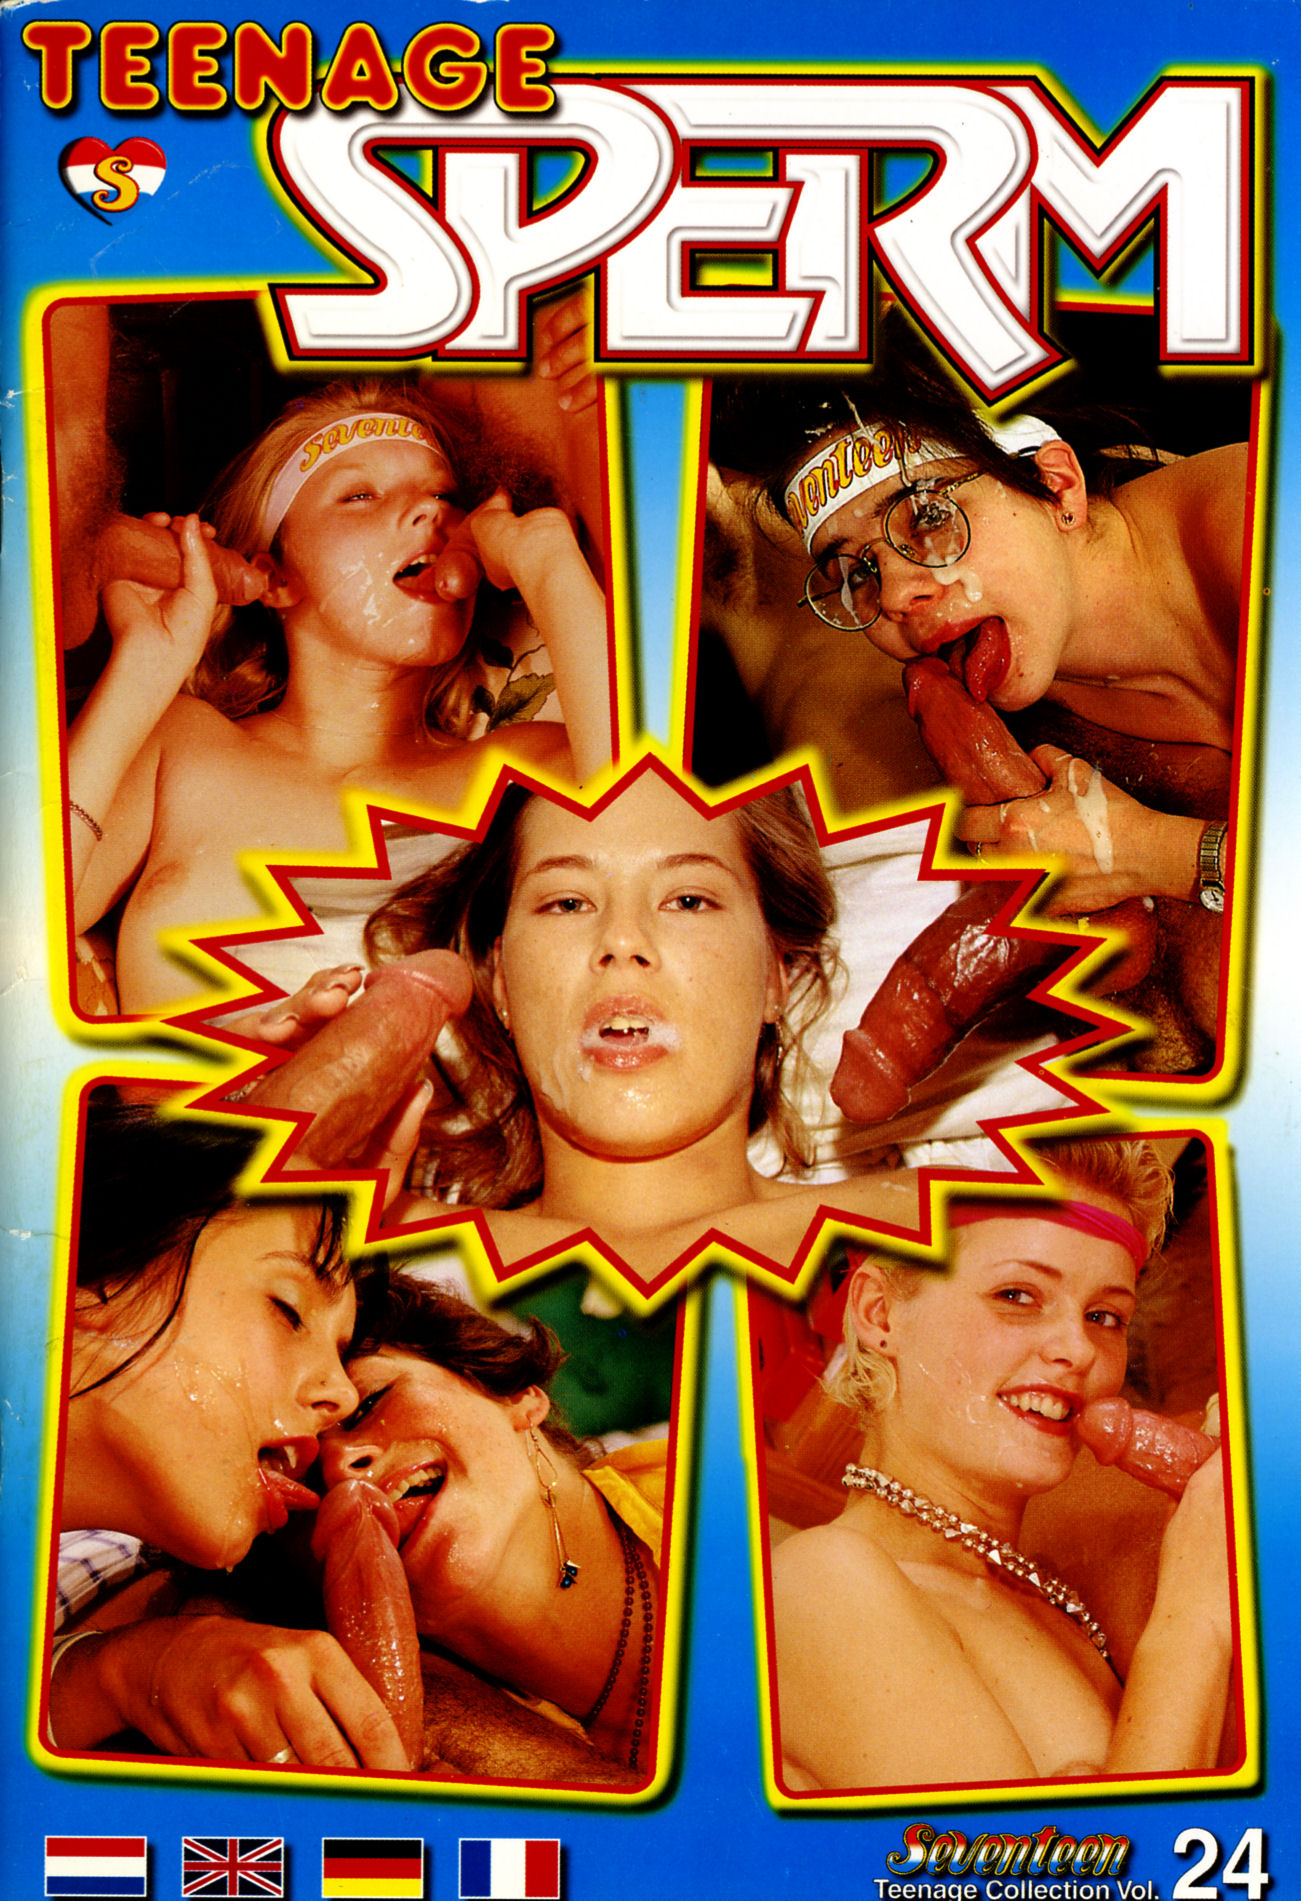 Vintage Sperm Porn - Teenage Sperm classic magazine Â» Vintage 8mm Porn, 8mm Sex Films, Classic  Porn, Stag Movies, Glamour Films, Silent loops, Reel Porn